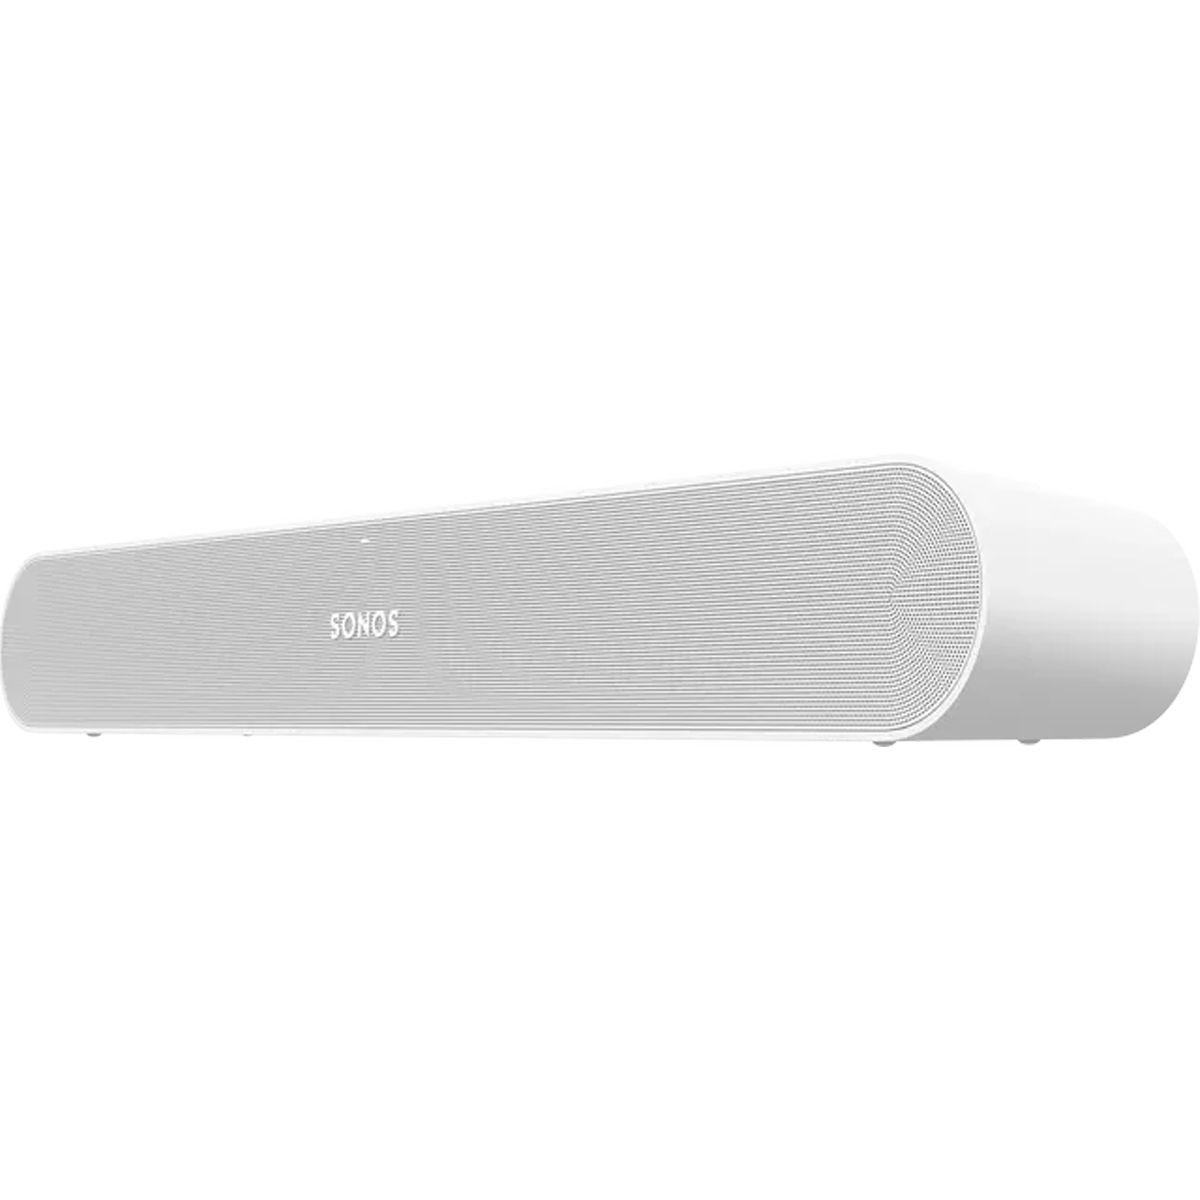 Sonos Ray Compact Soundbar - White - angled right side view